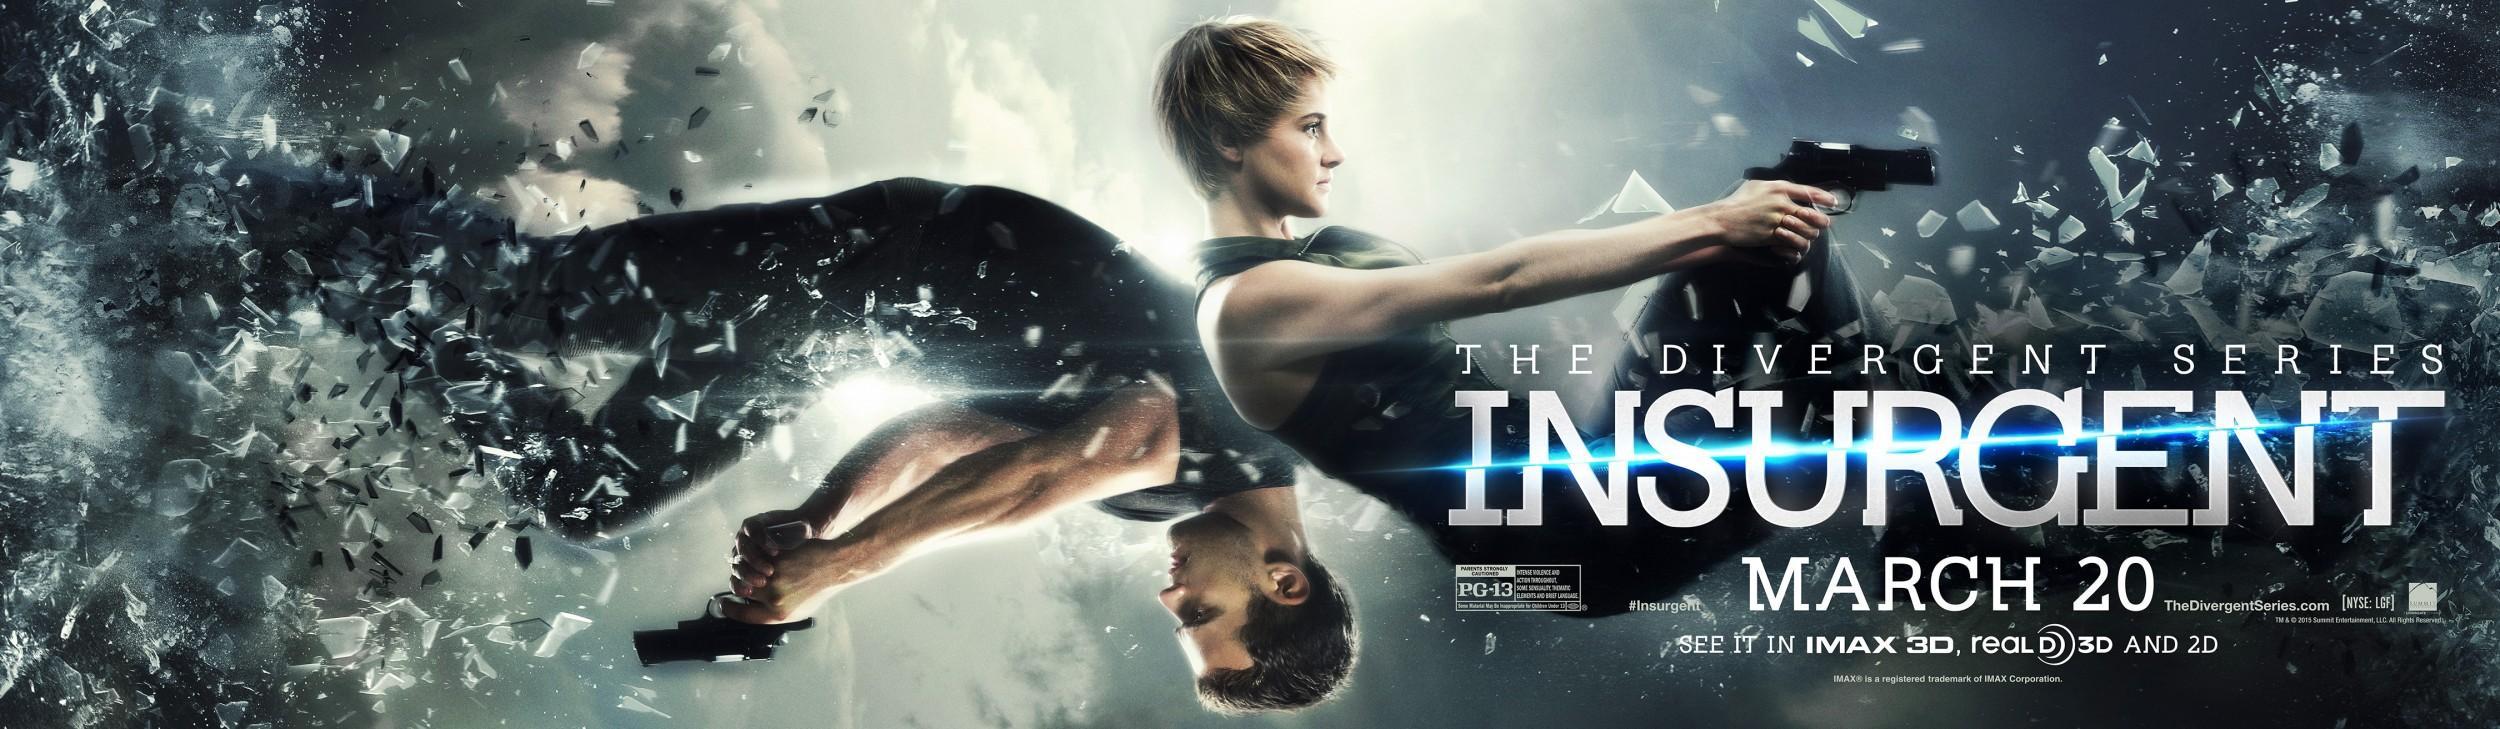 Постер фильма Дивергент, глава 2: Инсургент | Insurgent